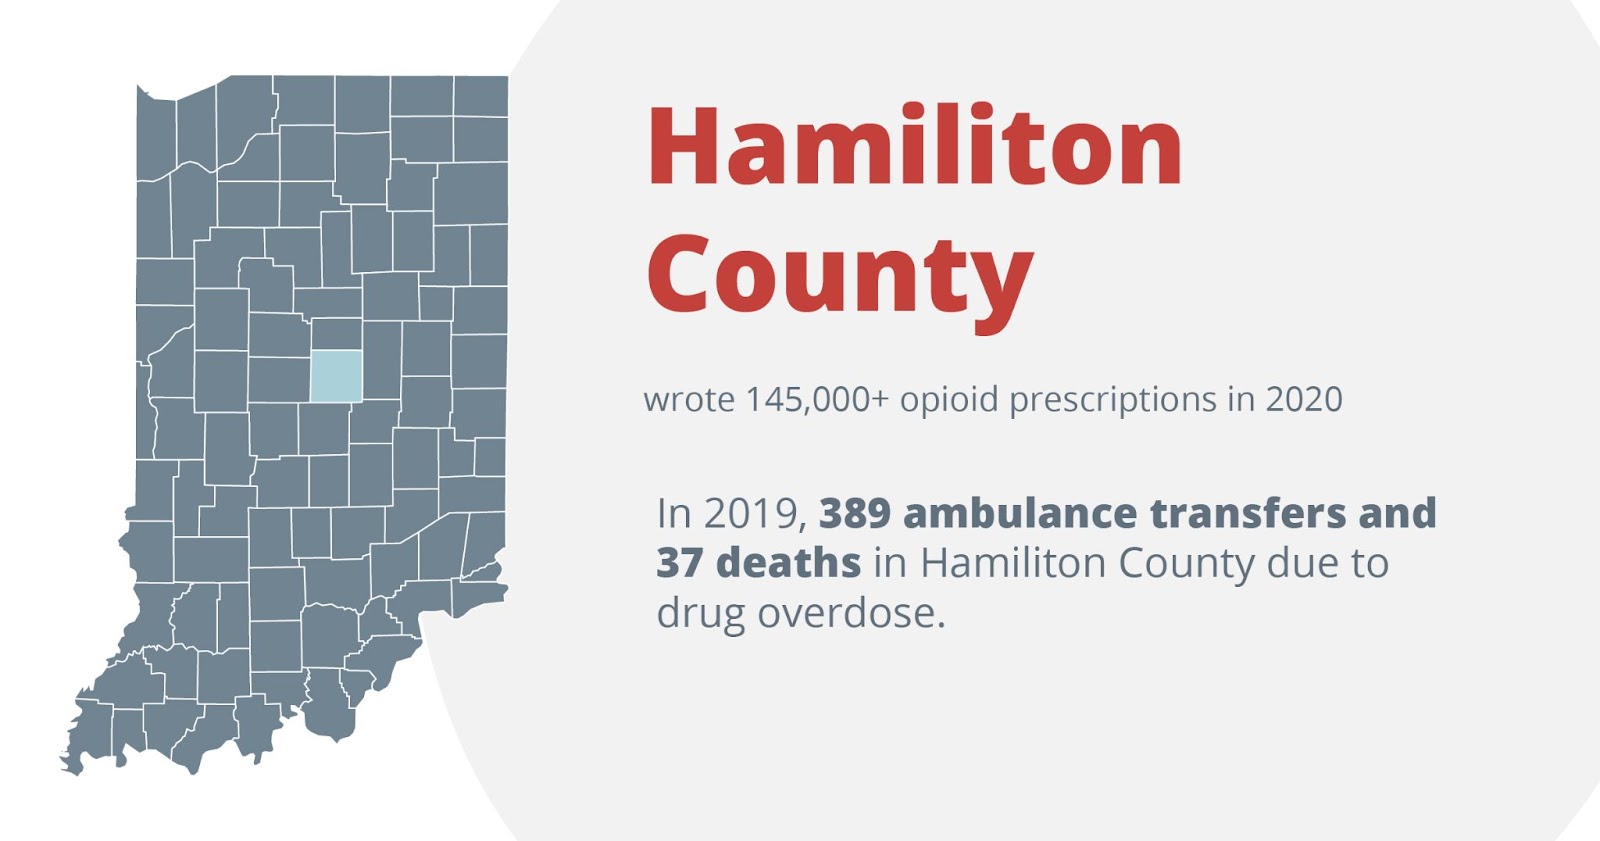 Hamilton county wrote 145,000+ opioid prescriptions in 2020. in 2019, 389 ambulance transfers and 37 deaths in hamilton county due to drug overdose